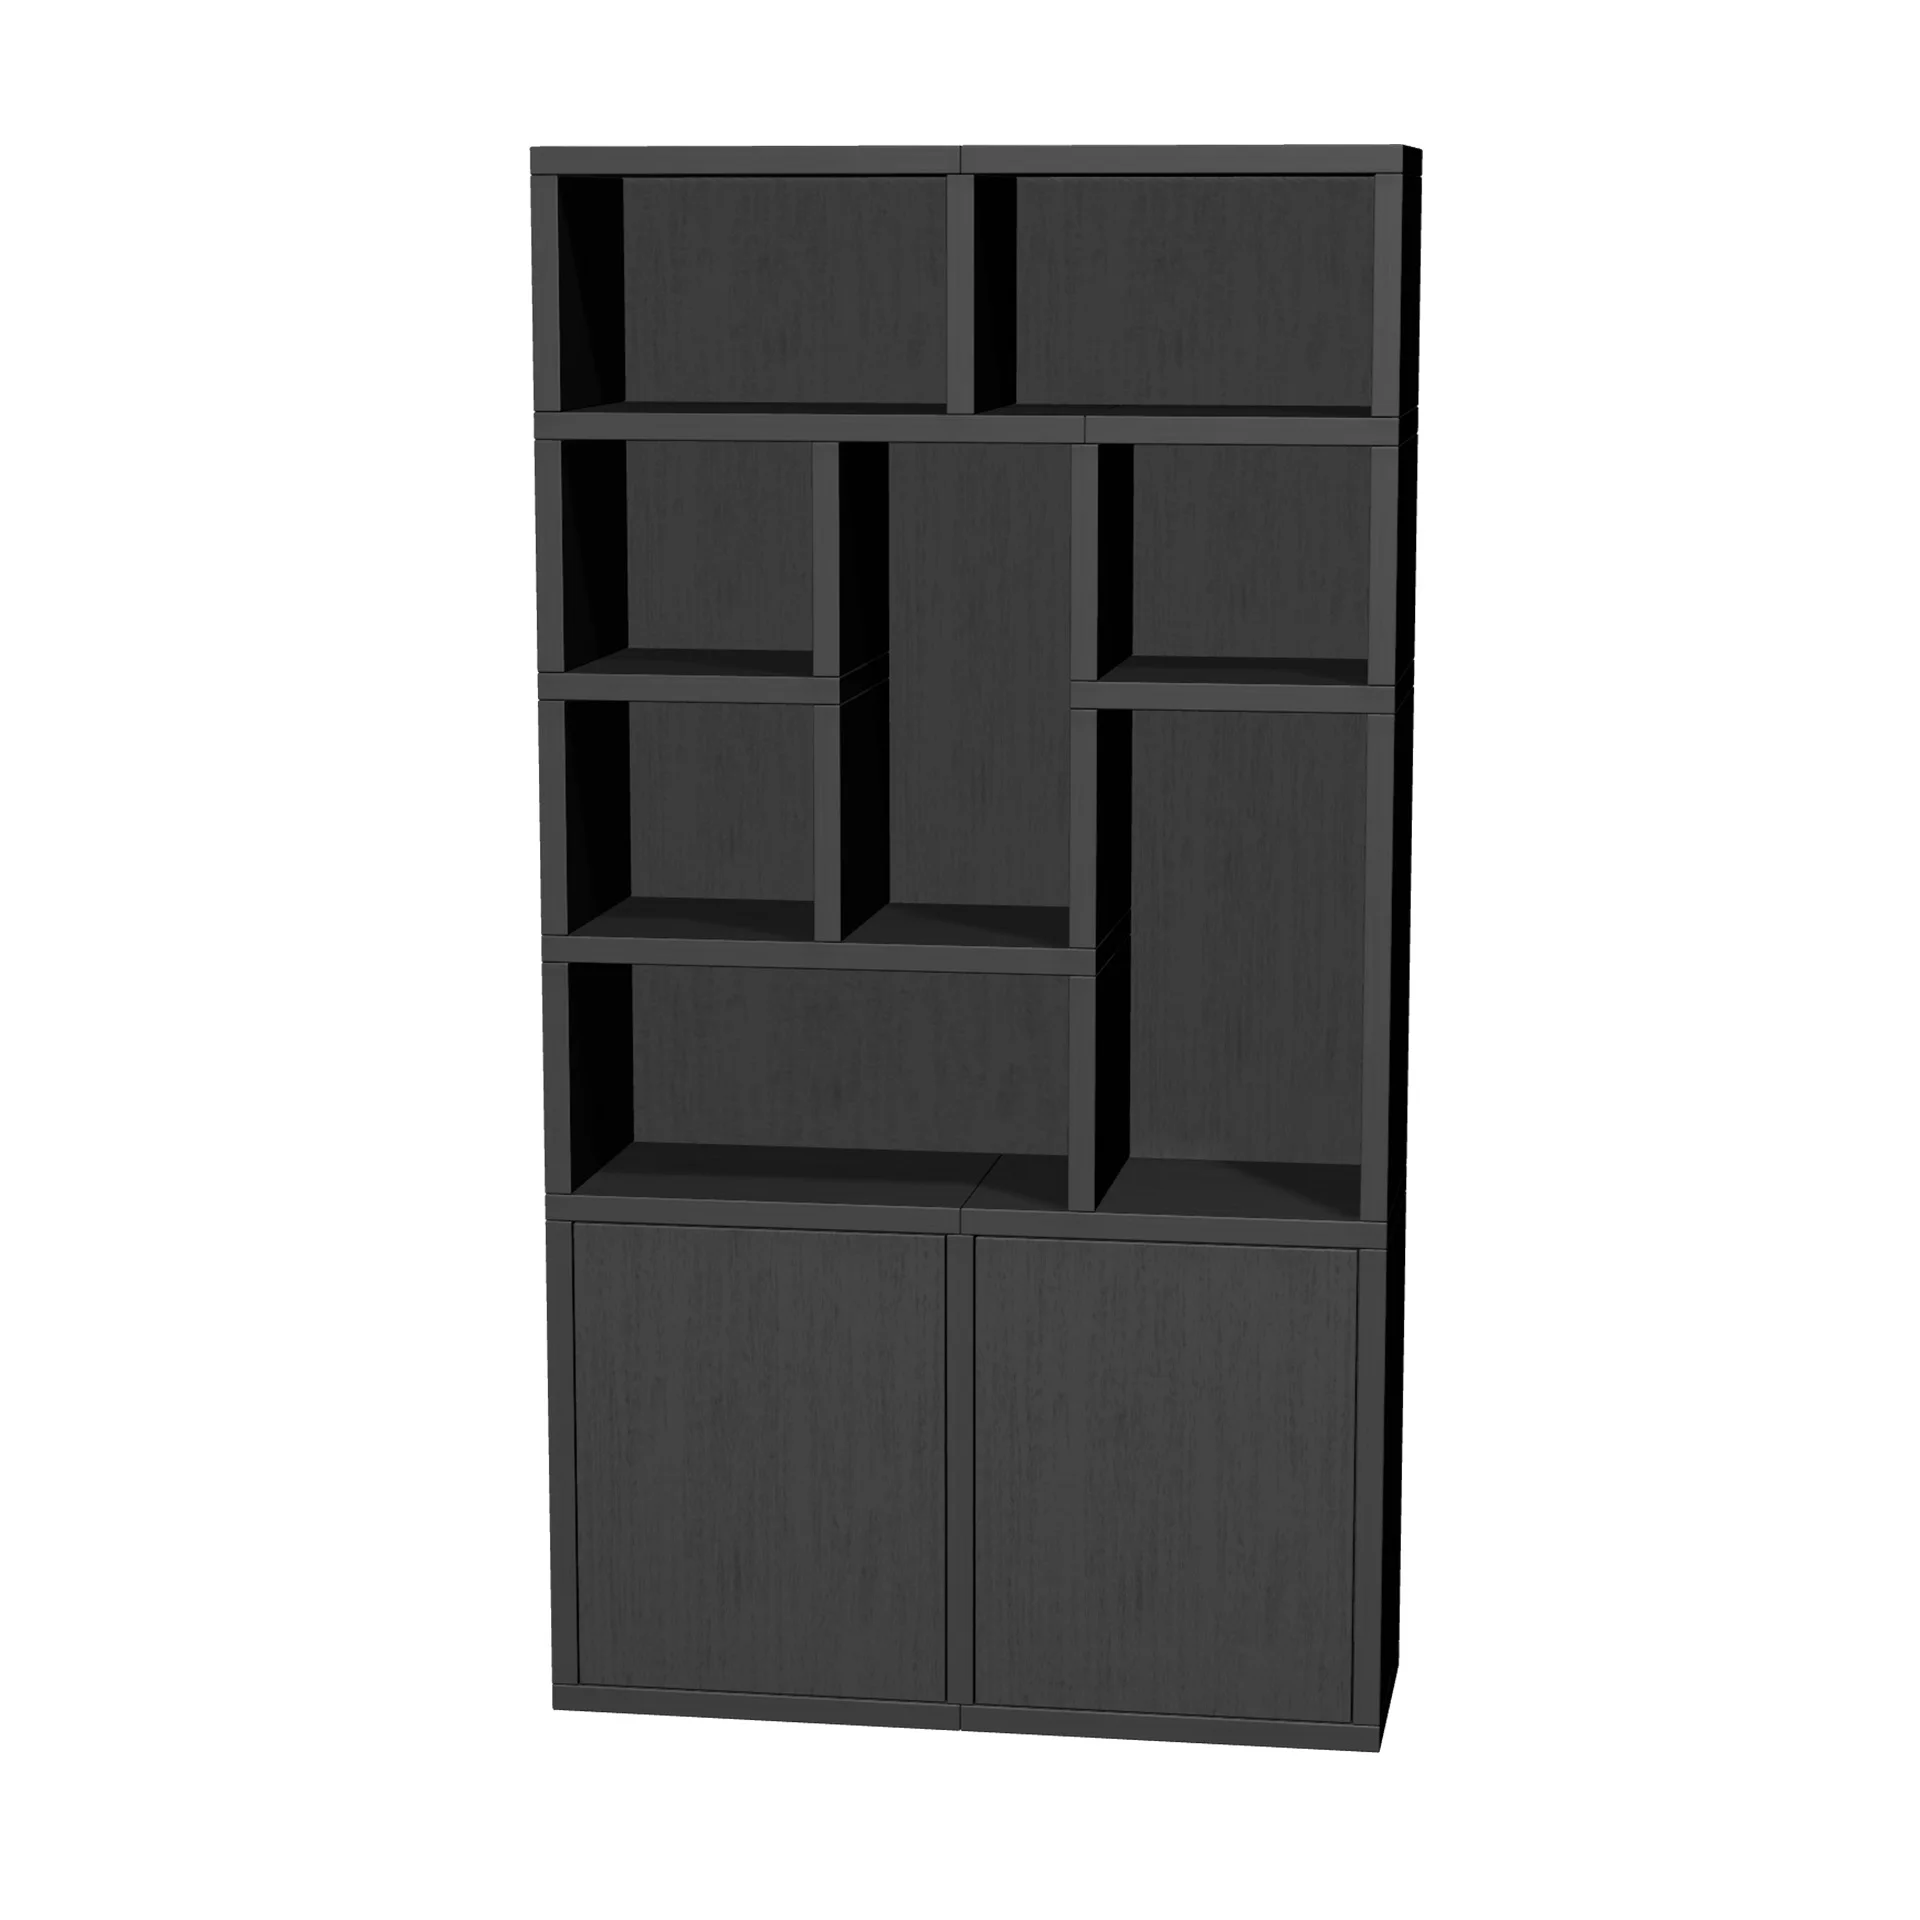 TSFC044 en panel mueble roble negro